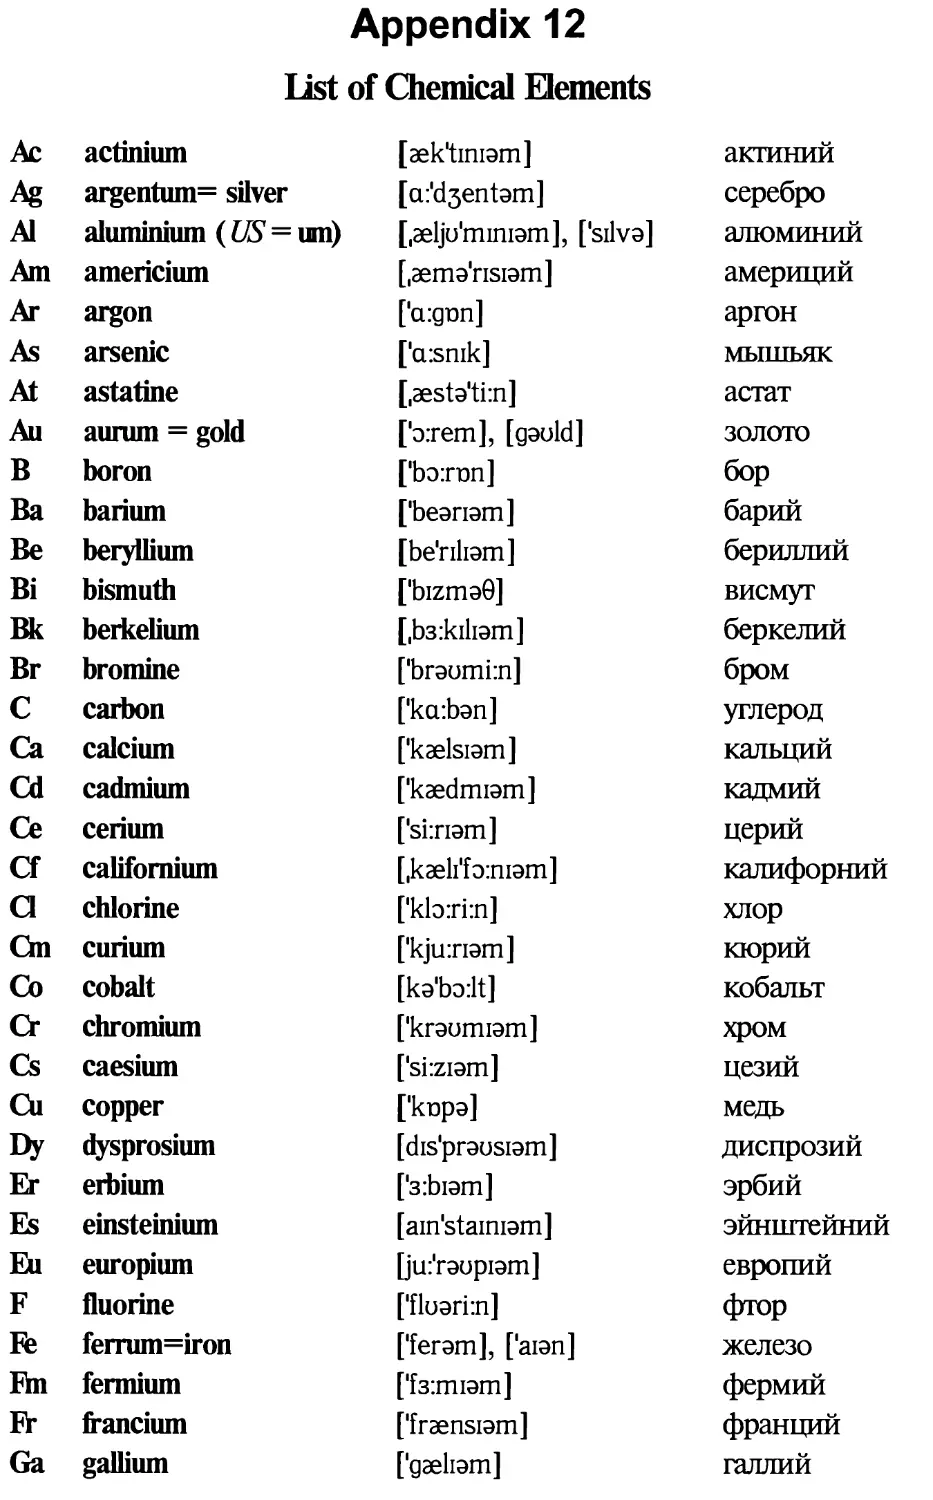 Appendix 12. List of Chemical Elements